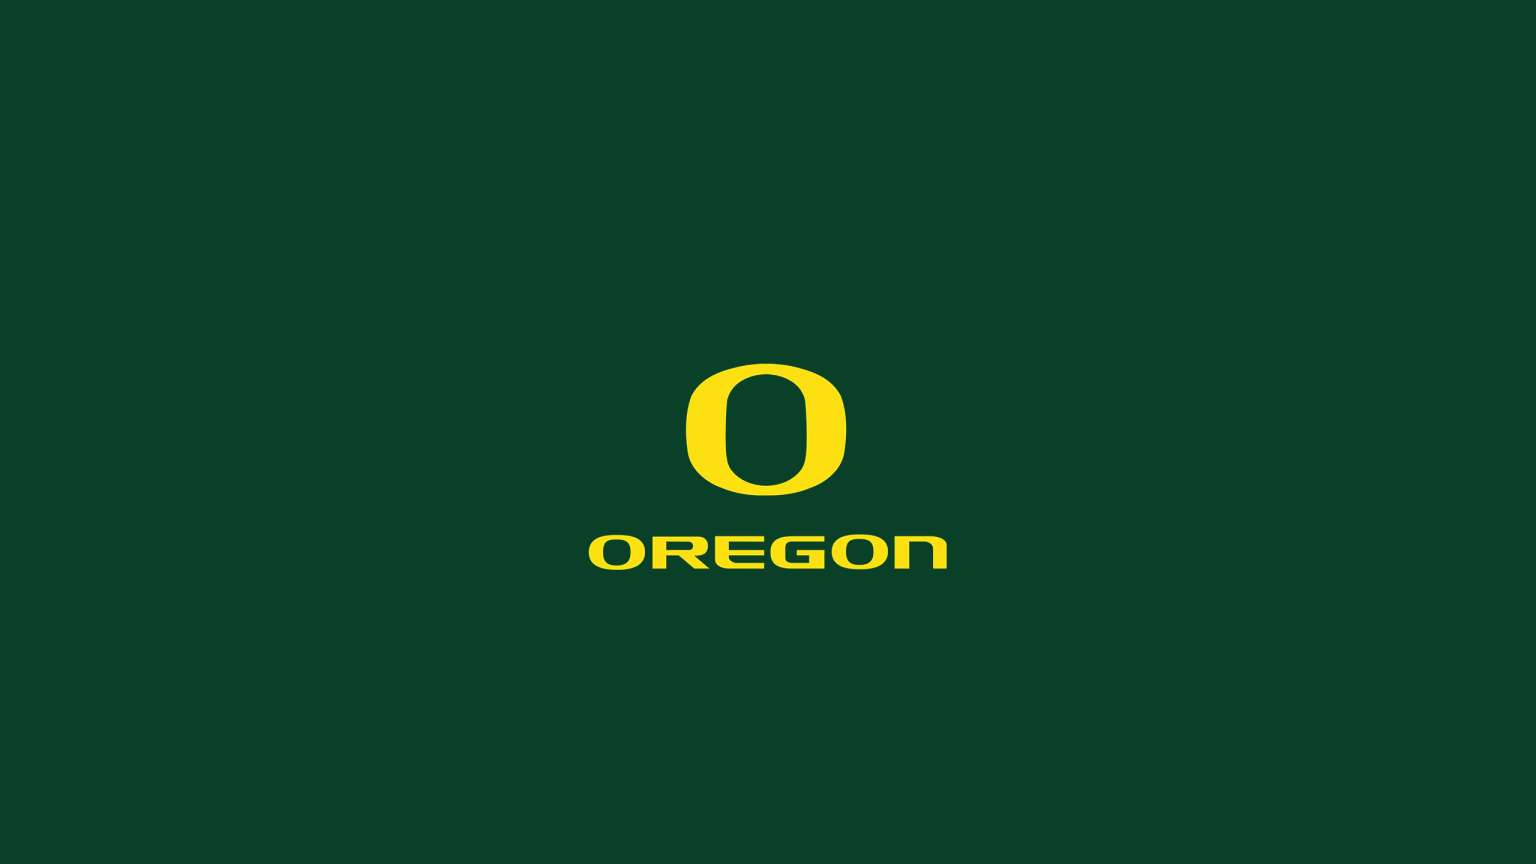 Oregon Ducks Basketball - NCAAB - Square Bettor